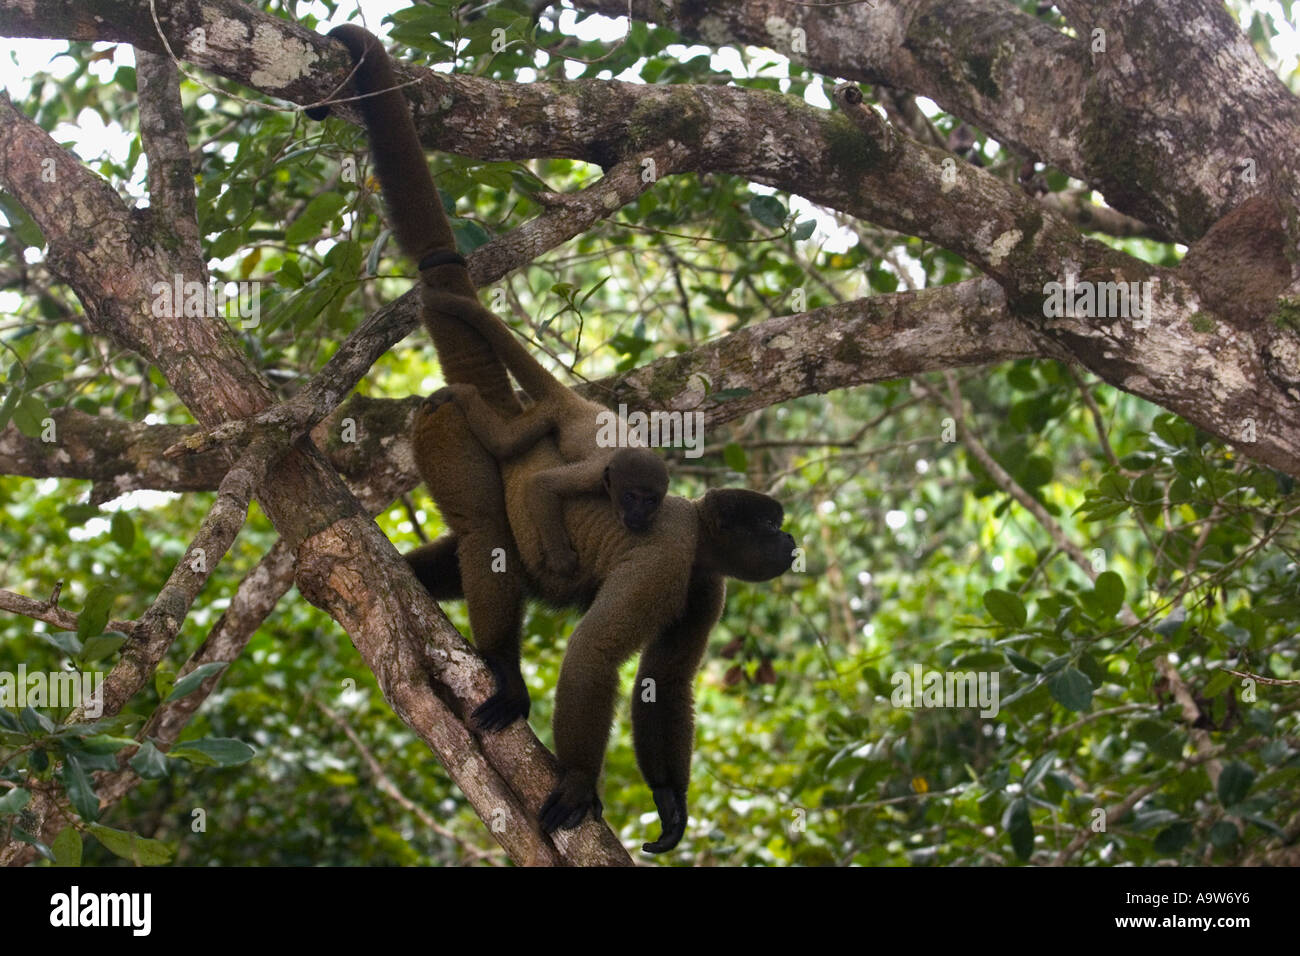 Humboldt s woolly monkey with baby Amazon state Brazil Stock Photo